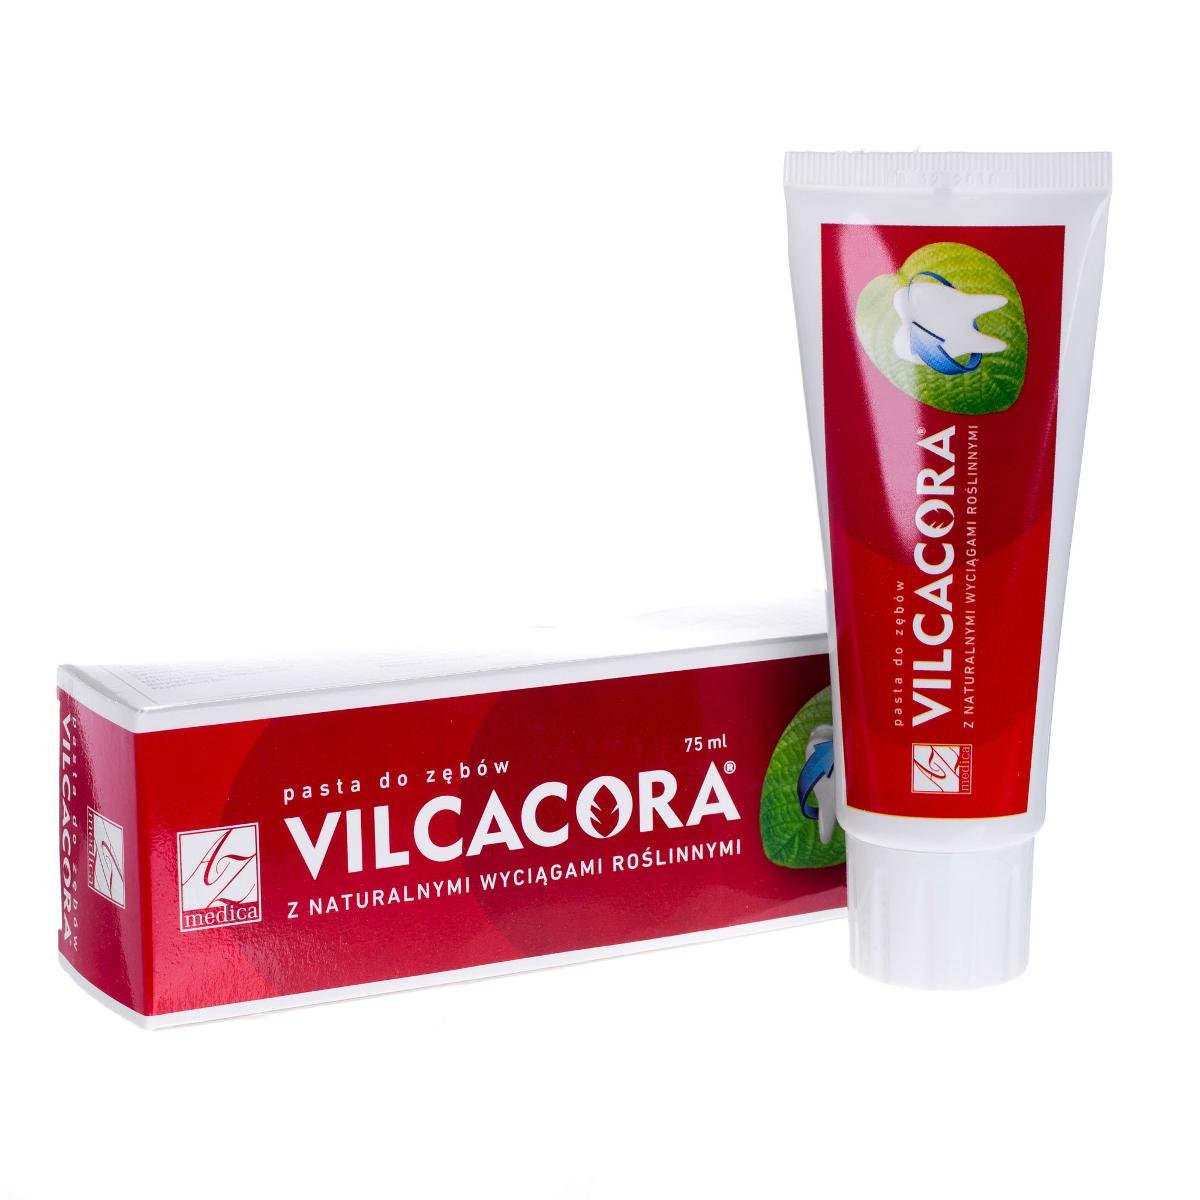 A-Z Medica Vilcacora pasta do zębów 75 ml 7029465